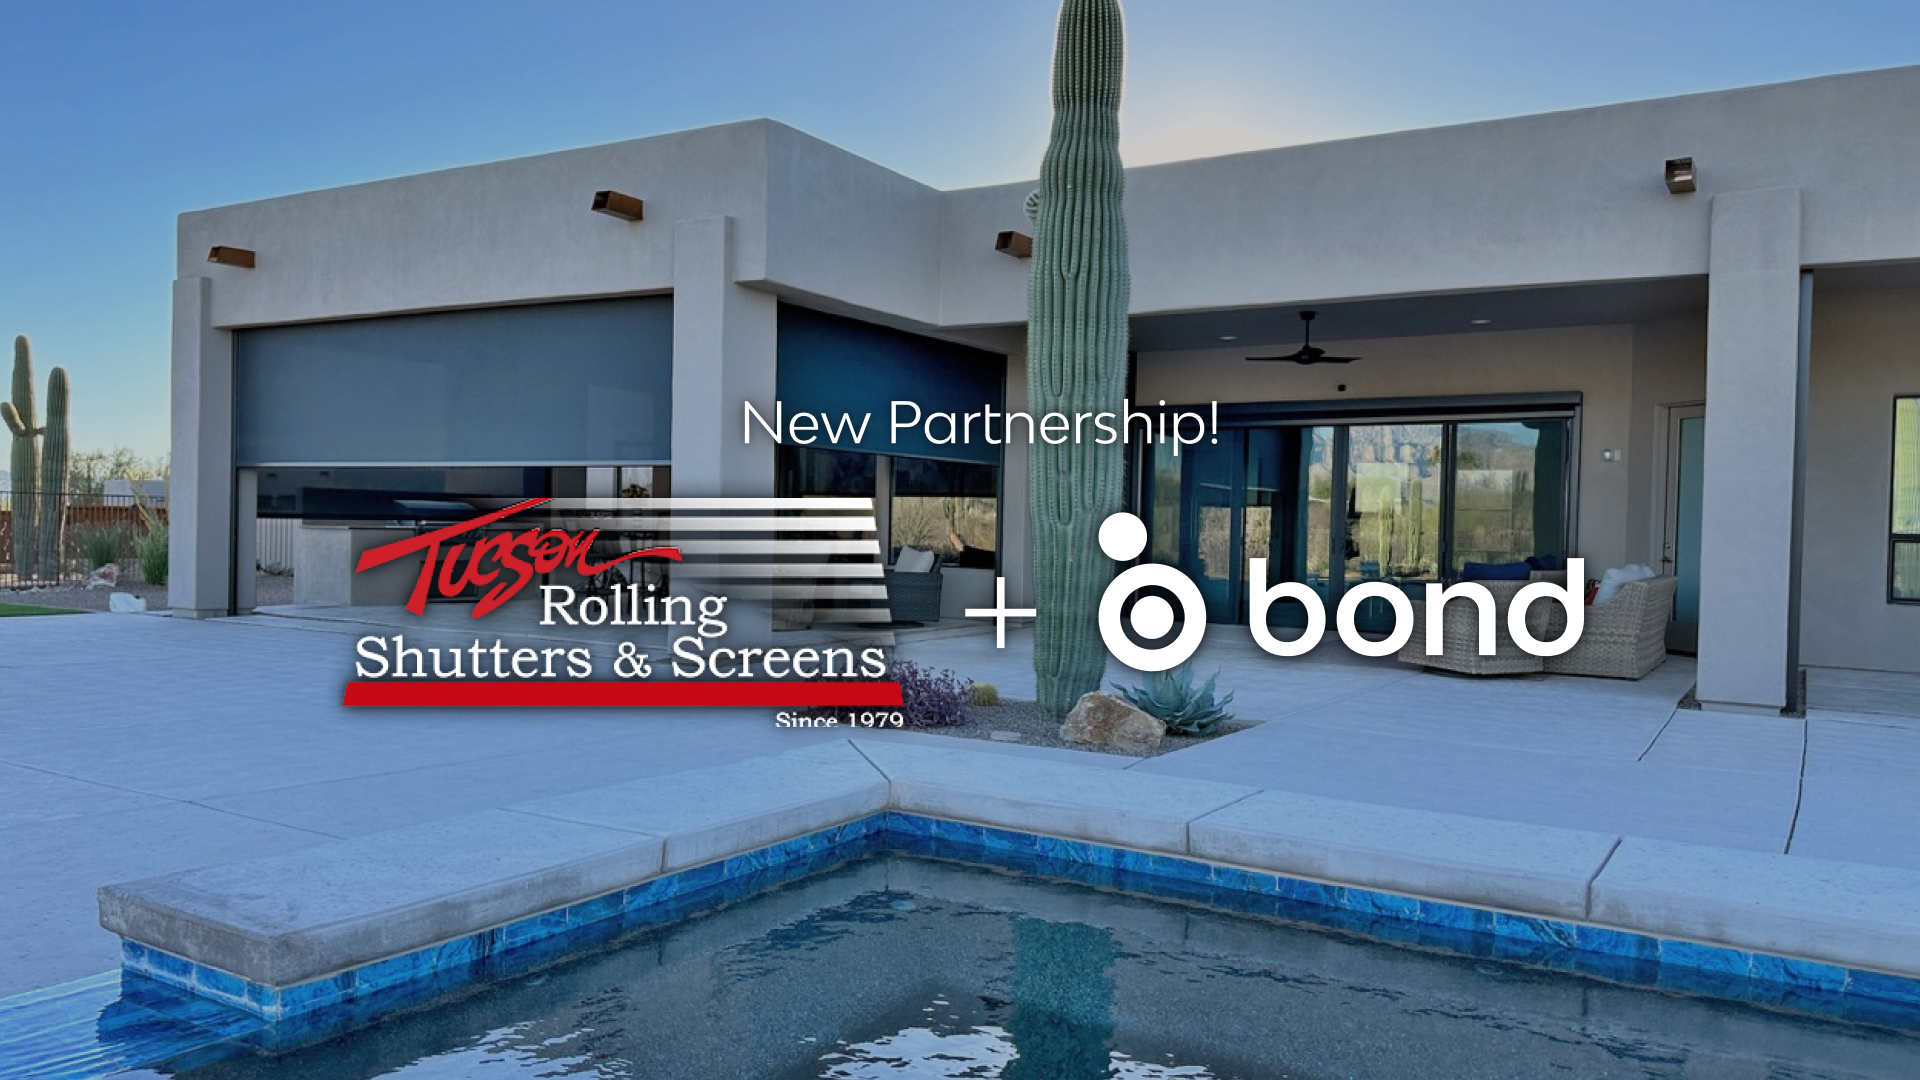 New Partnership! Tucson Rolling Shutters & Screens